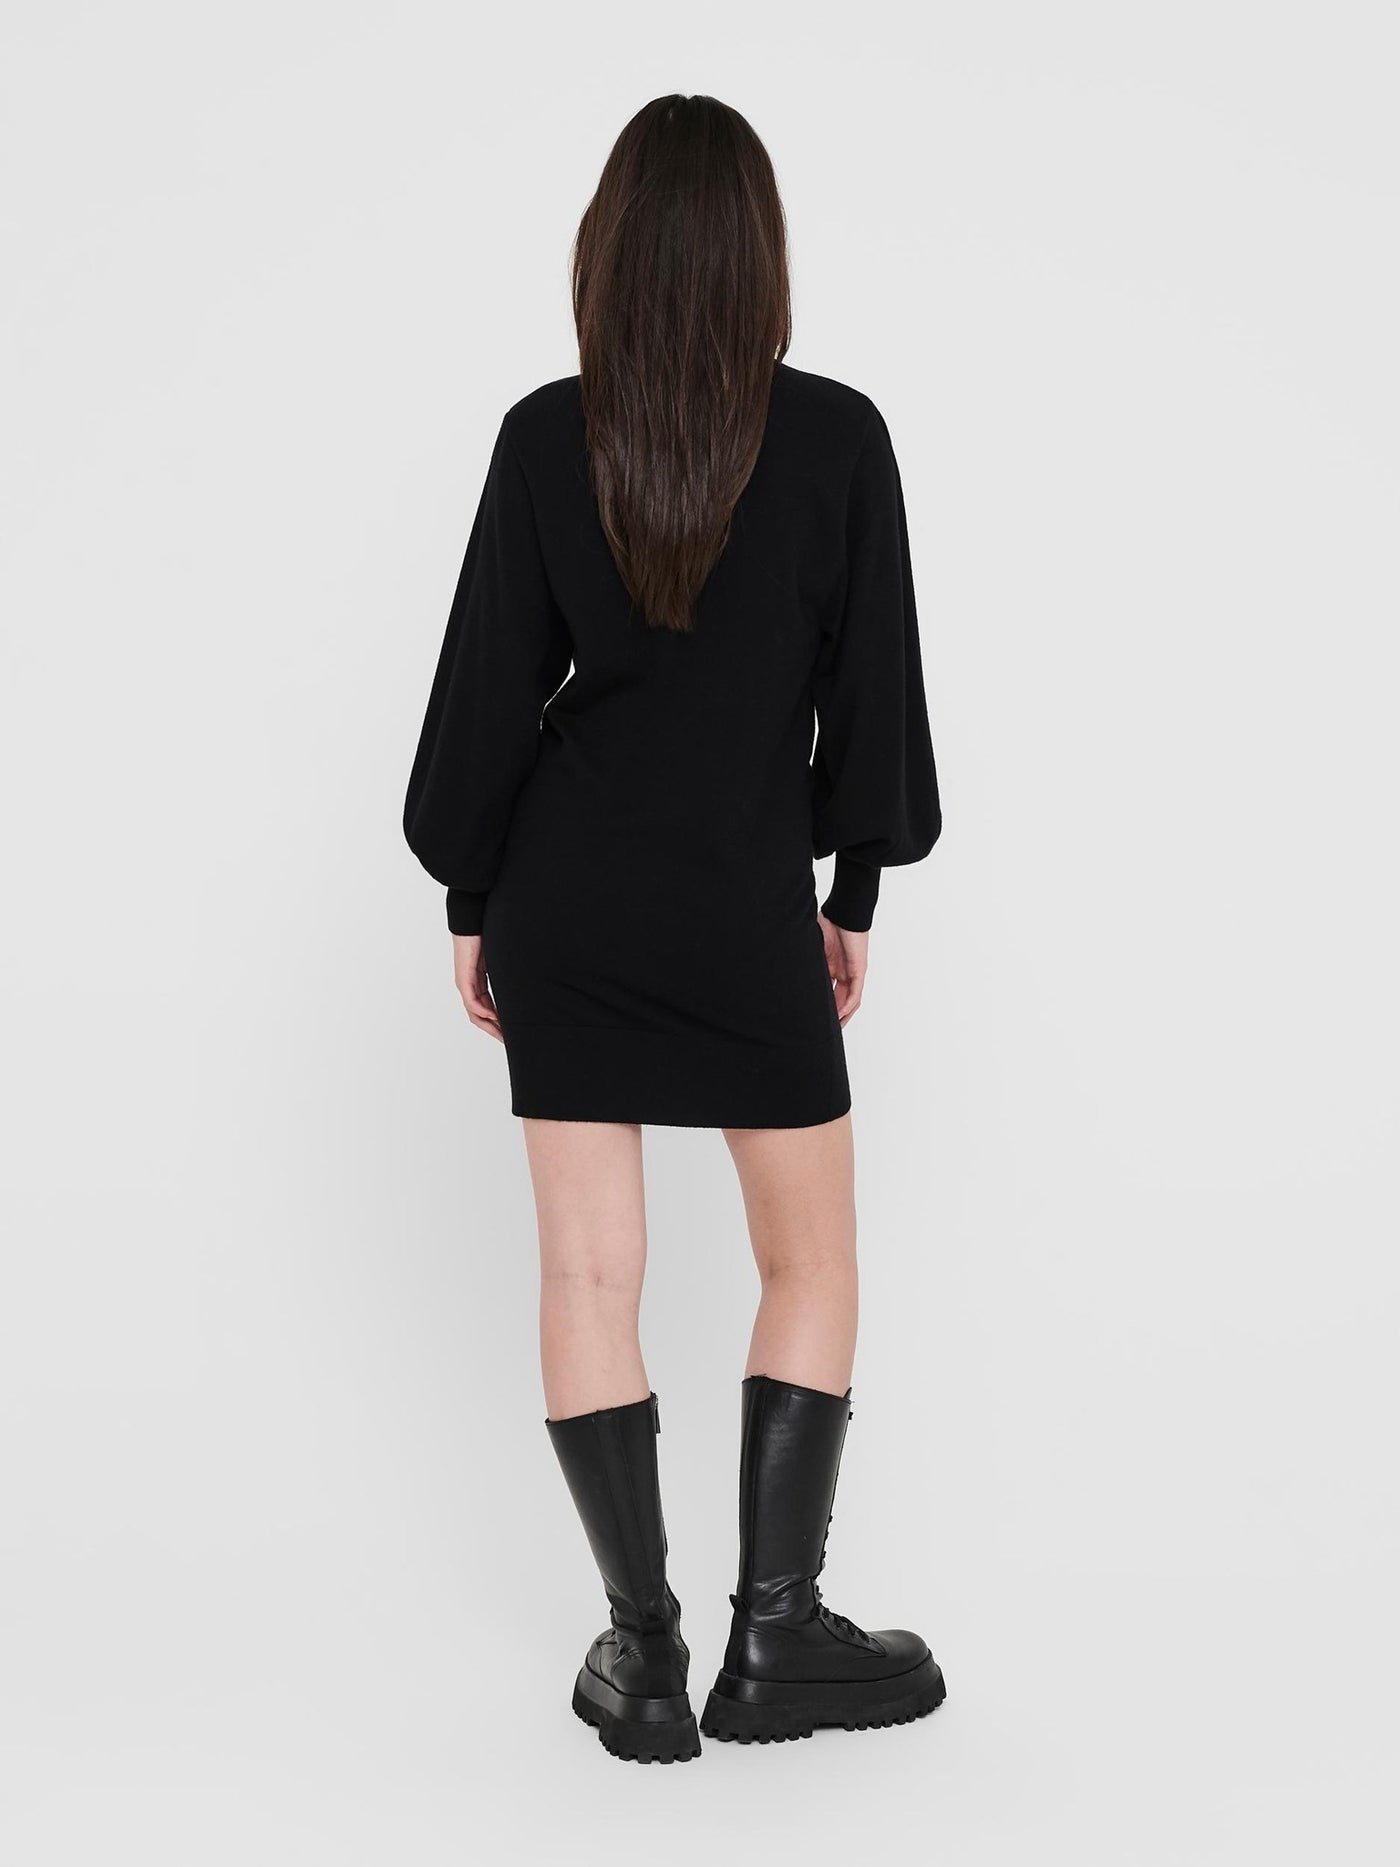 Labelle Knit Dress - Black - ONLY - Black 3